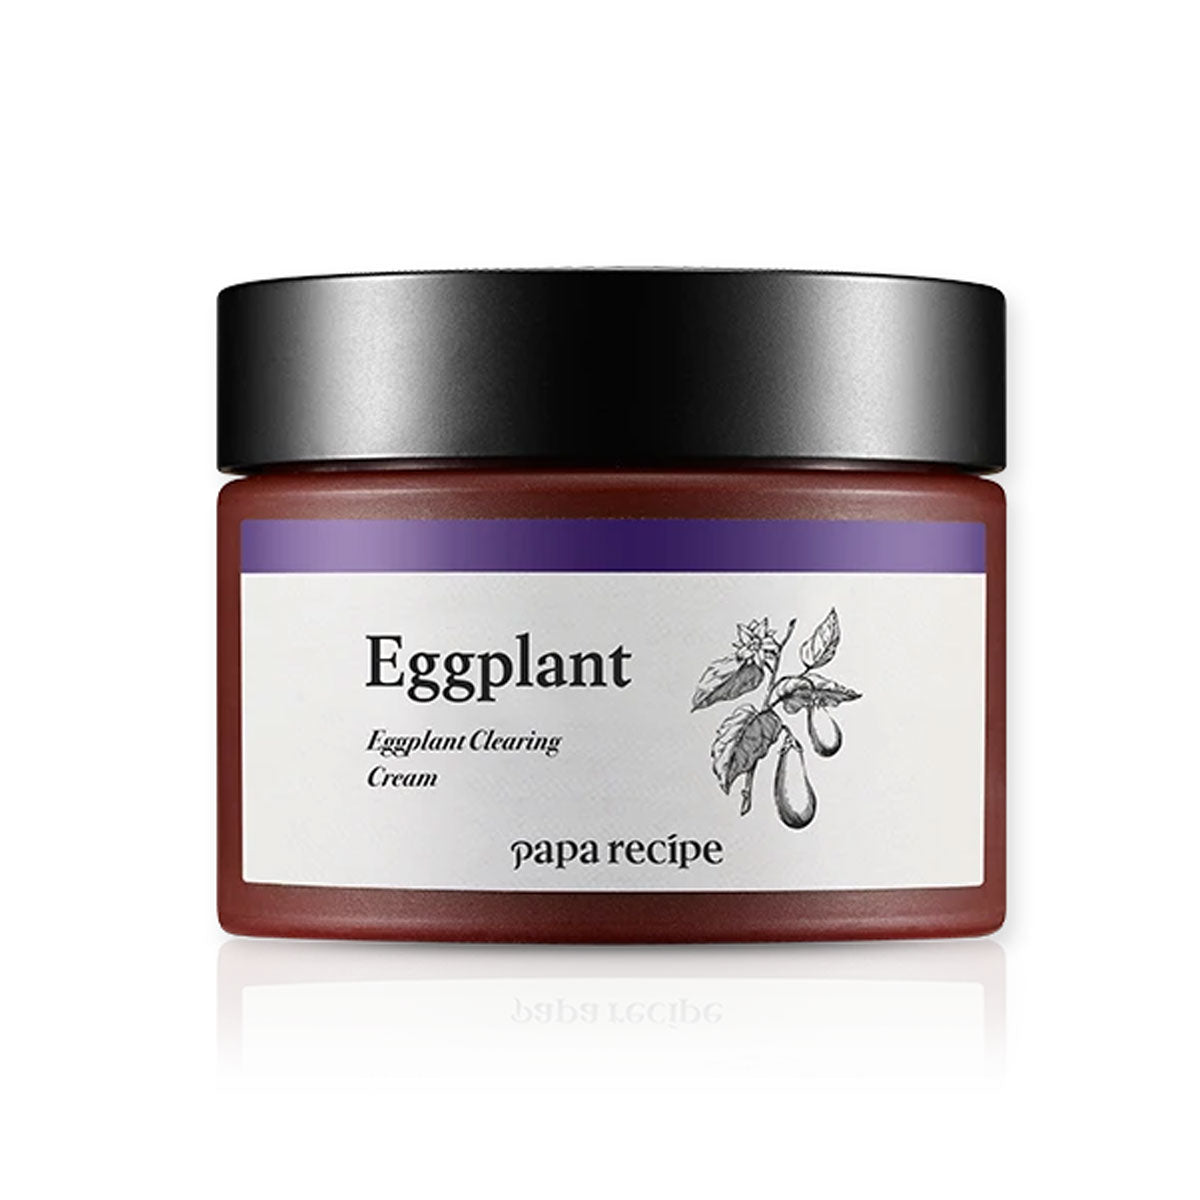 Papa Recipe - Eggplant Clearing Cream - 50 ml